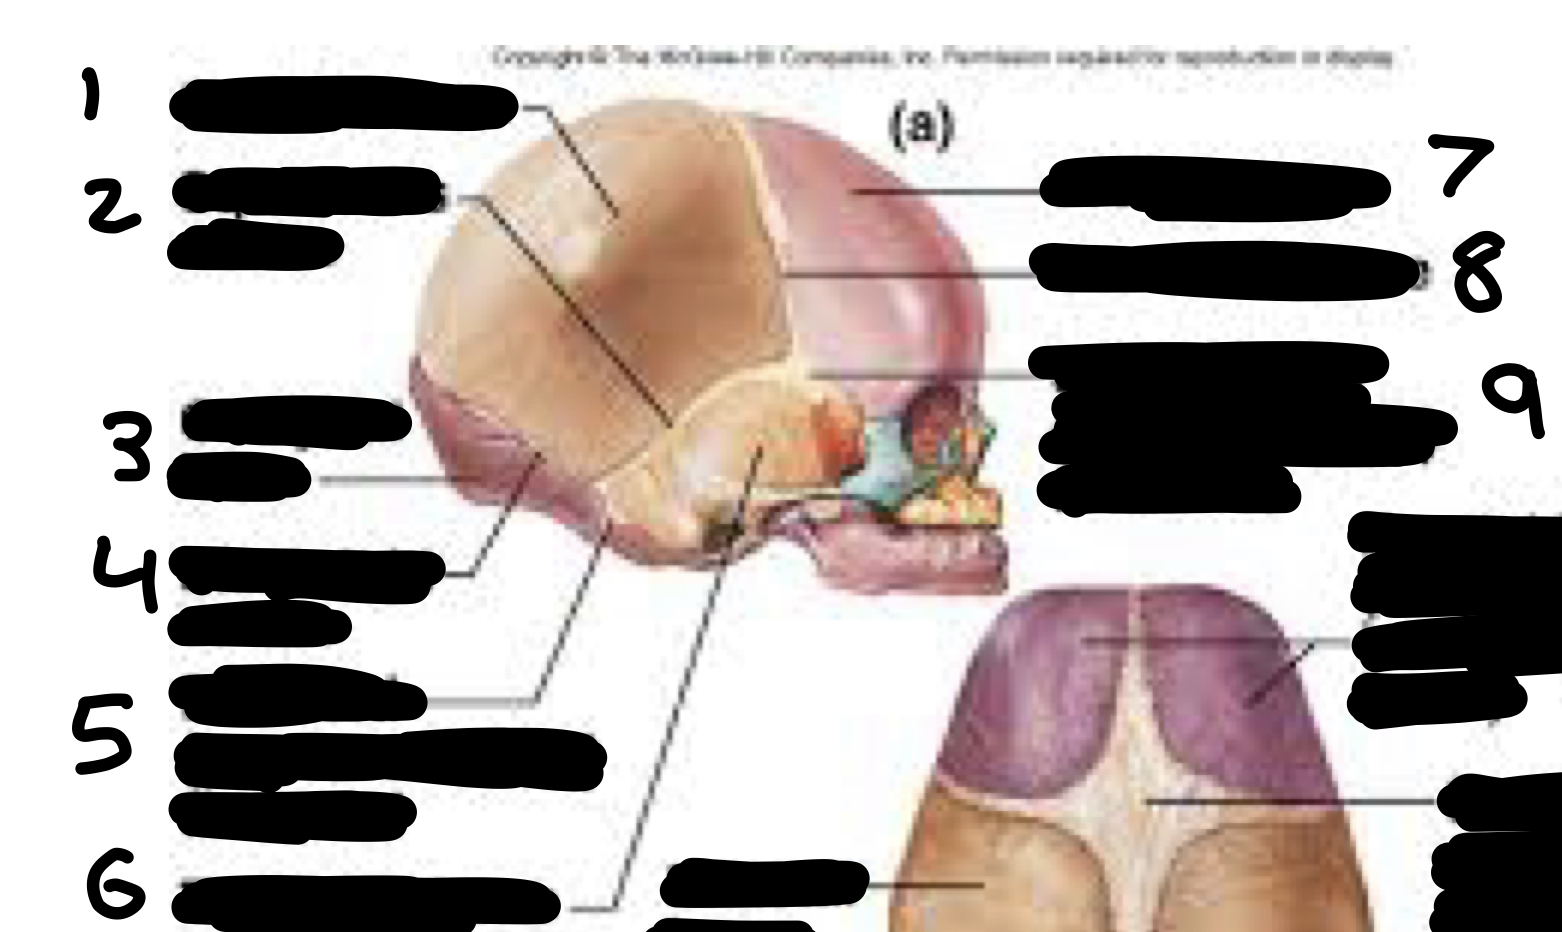 <ol><li><p>parietal bone</p></li><li><p>squamous suture</p></li><li><p>occipital bone</p></li><li><p>lambdoid suture</p></li><li><p>mastoid (posterolateral) fontanel</p></li><li><p>temporal bone</p></li><li><p>frontal bone</p></li><li><p>coronal suture</p></li><li><p>sphenoidal (anterolateral) fontanel</p></li></ol>